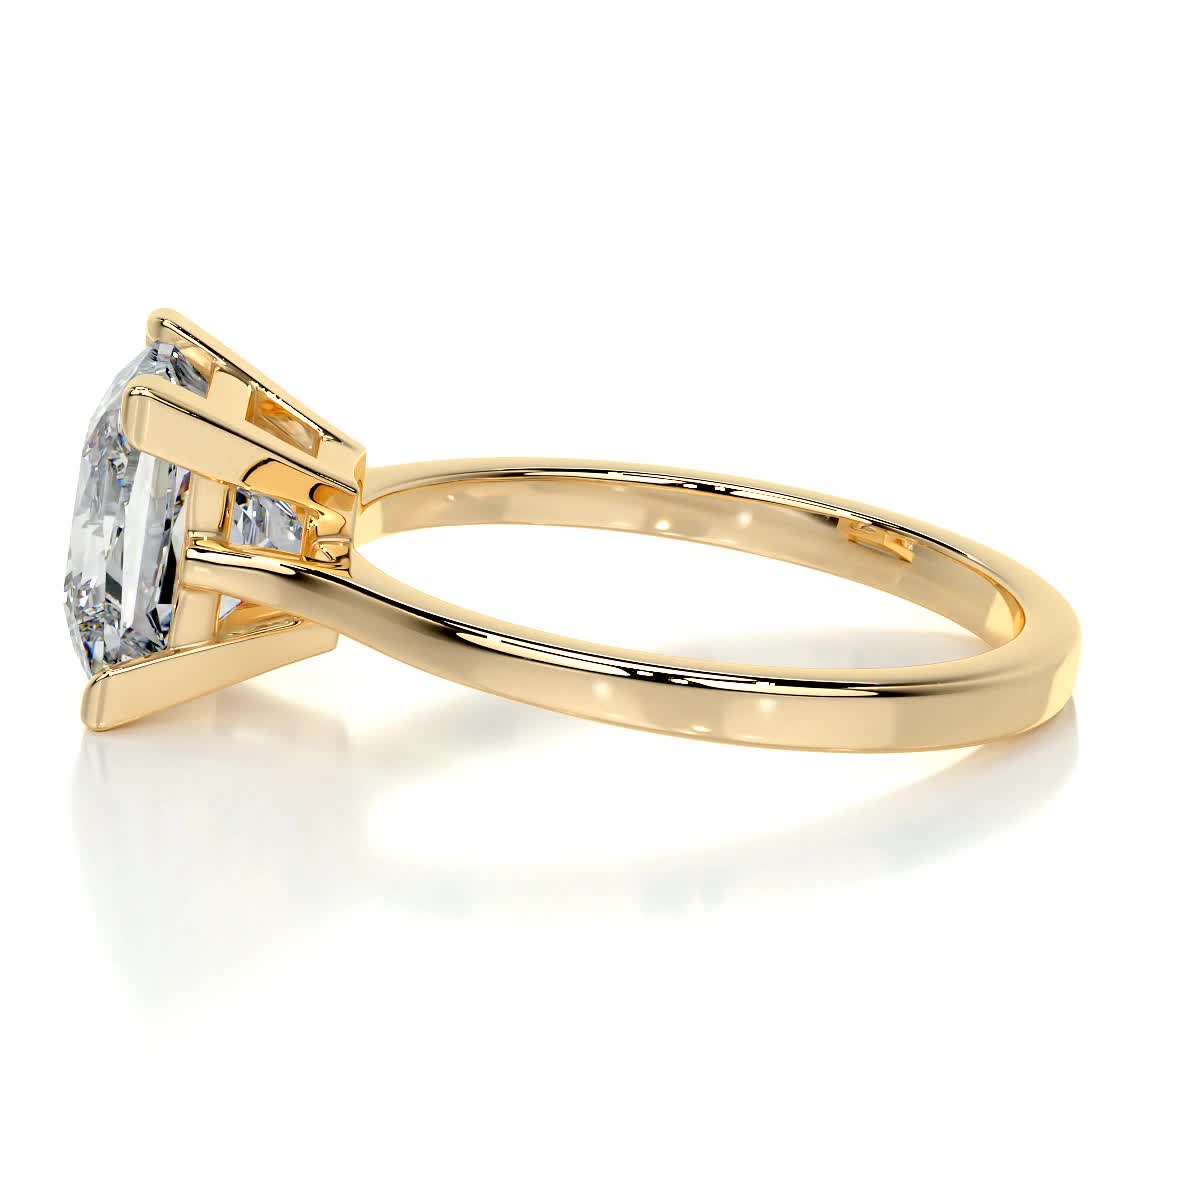 3.0 CT Princess Solitaire CVD F/VS2 Diamond Engagement Ring 10